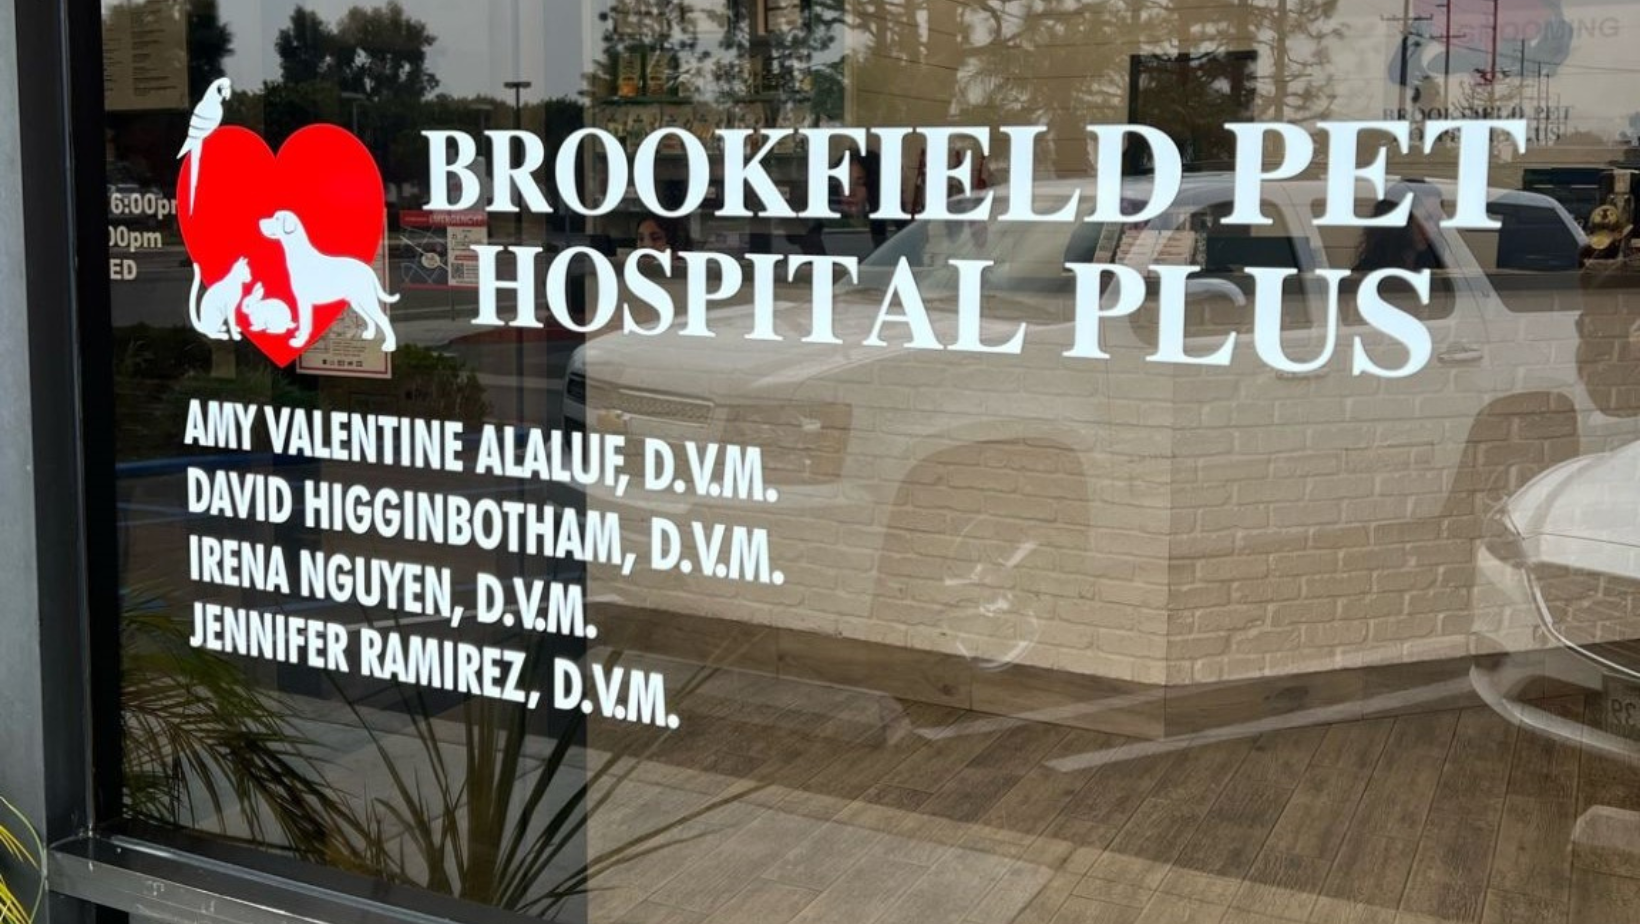 Brookfield Pet Hospital